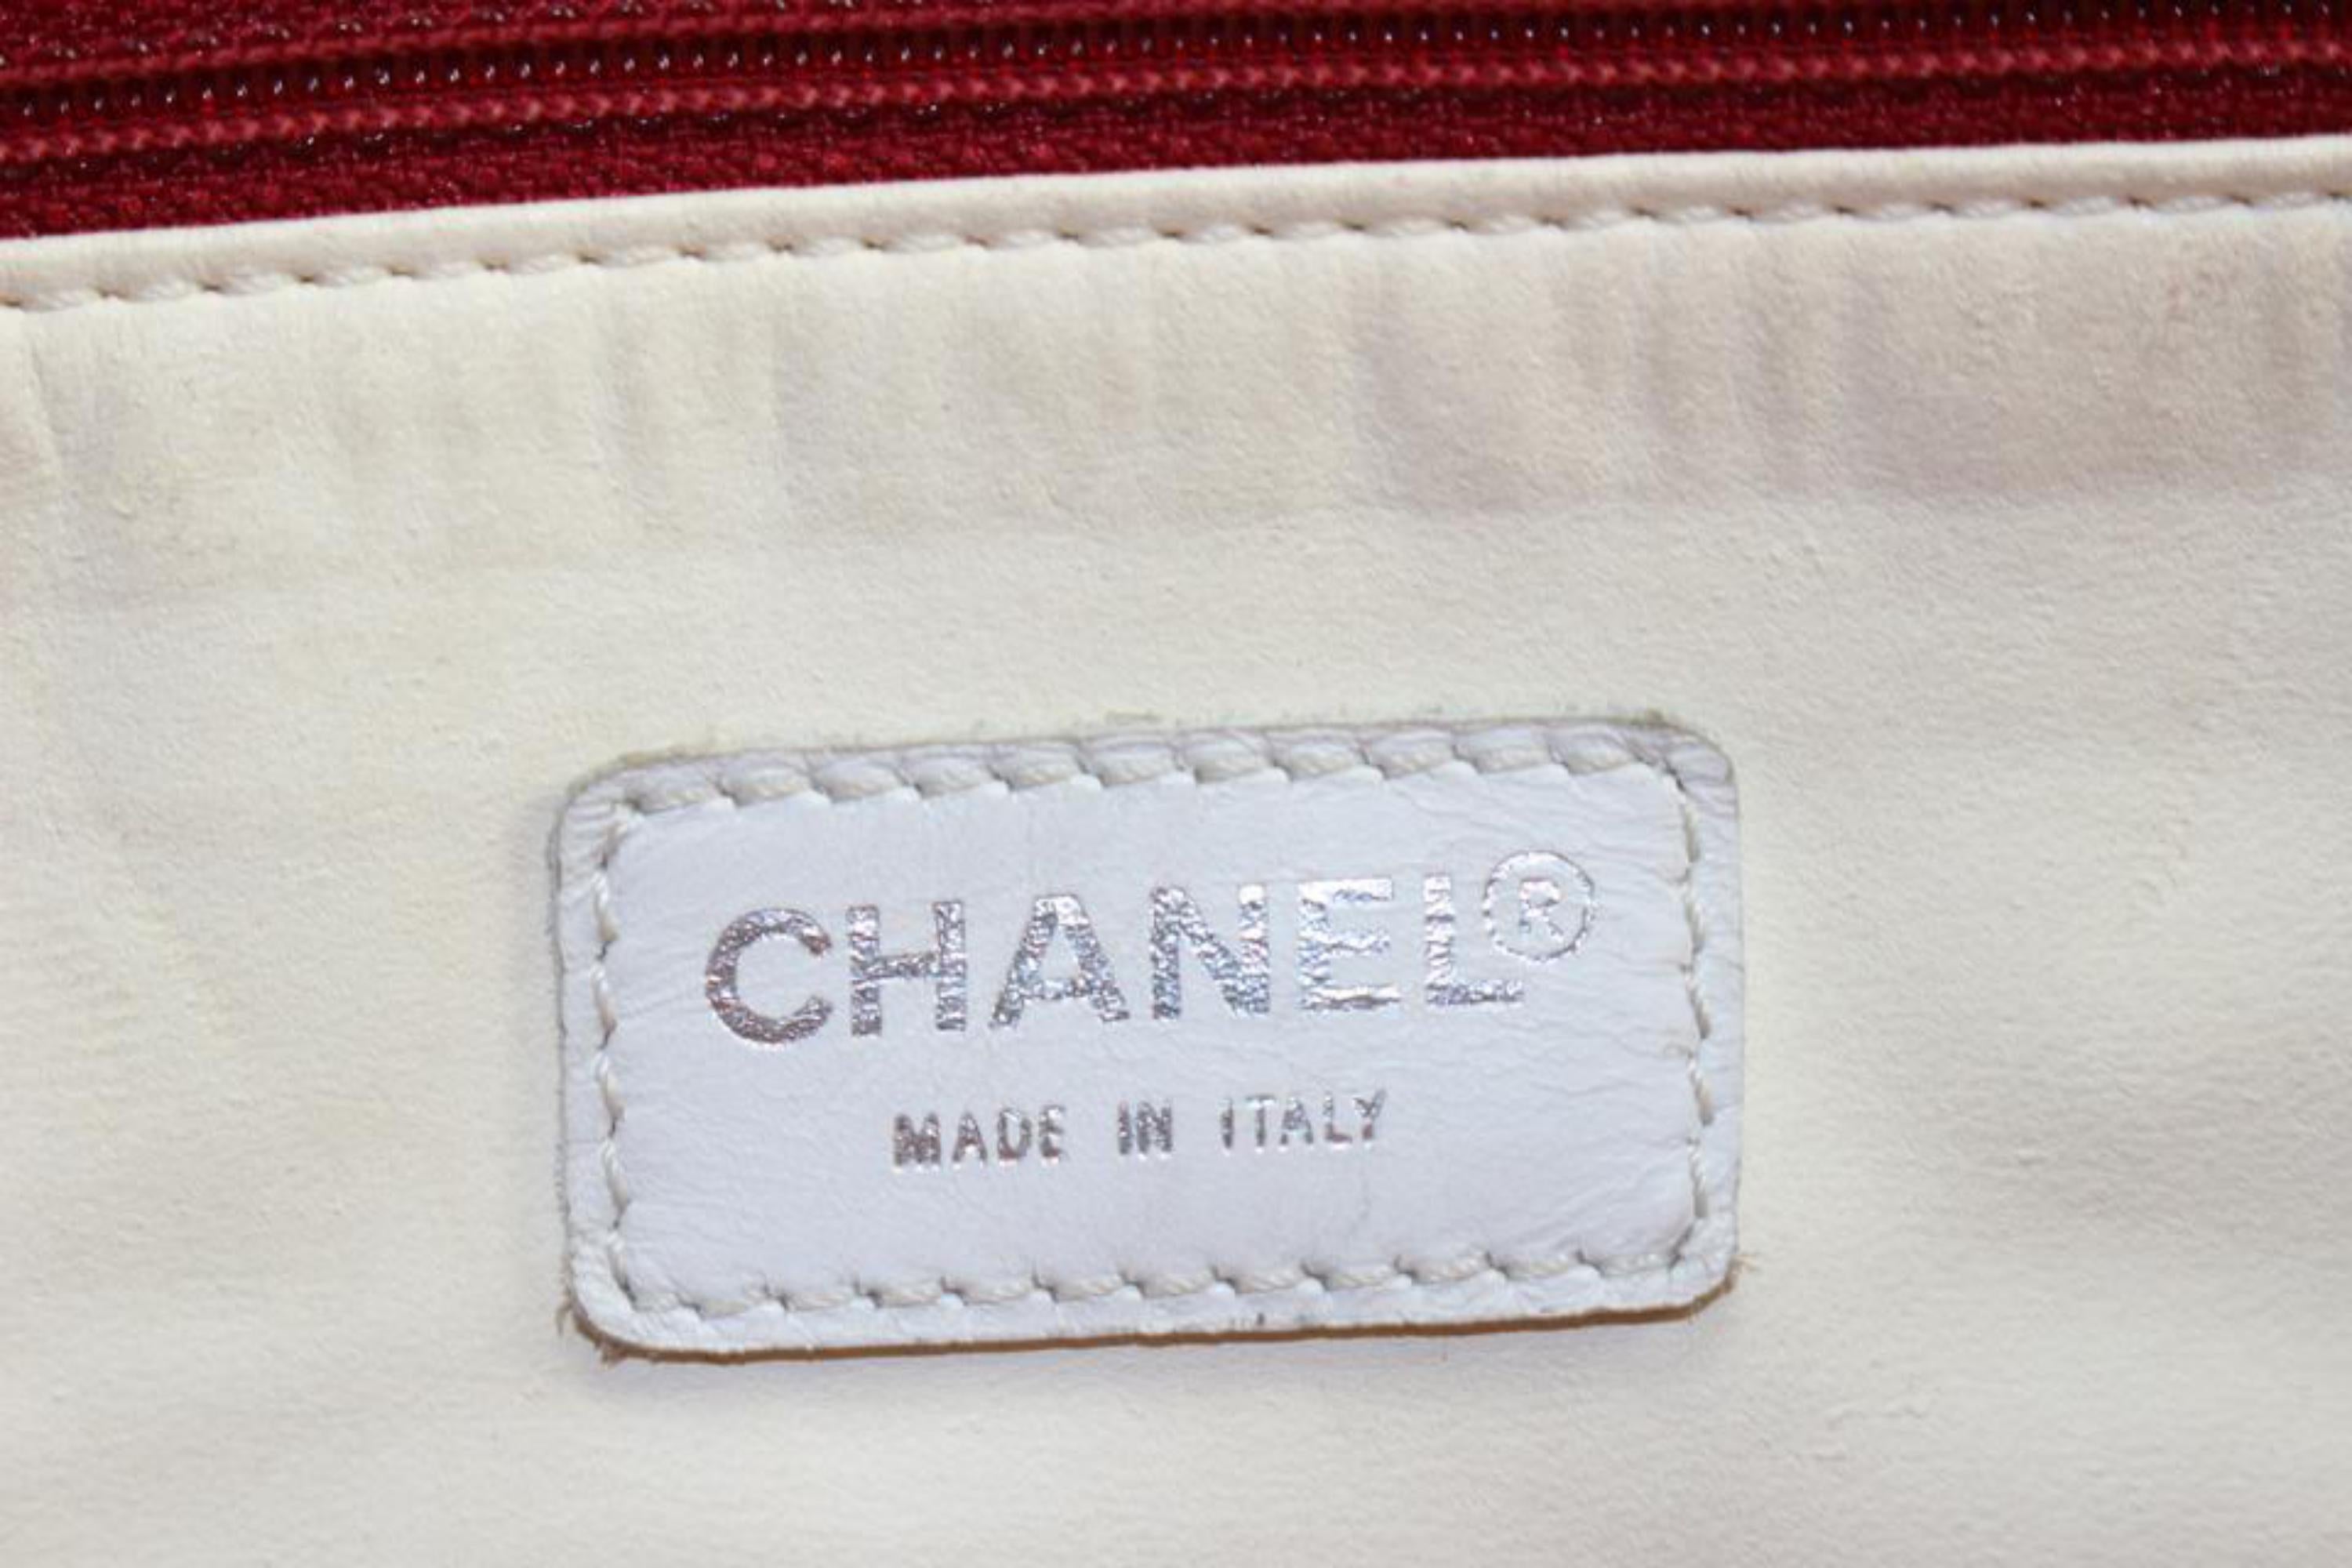 Chanel Red Coco Print Beach Tote Bag 86cz56s 2